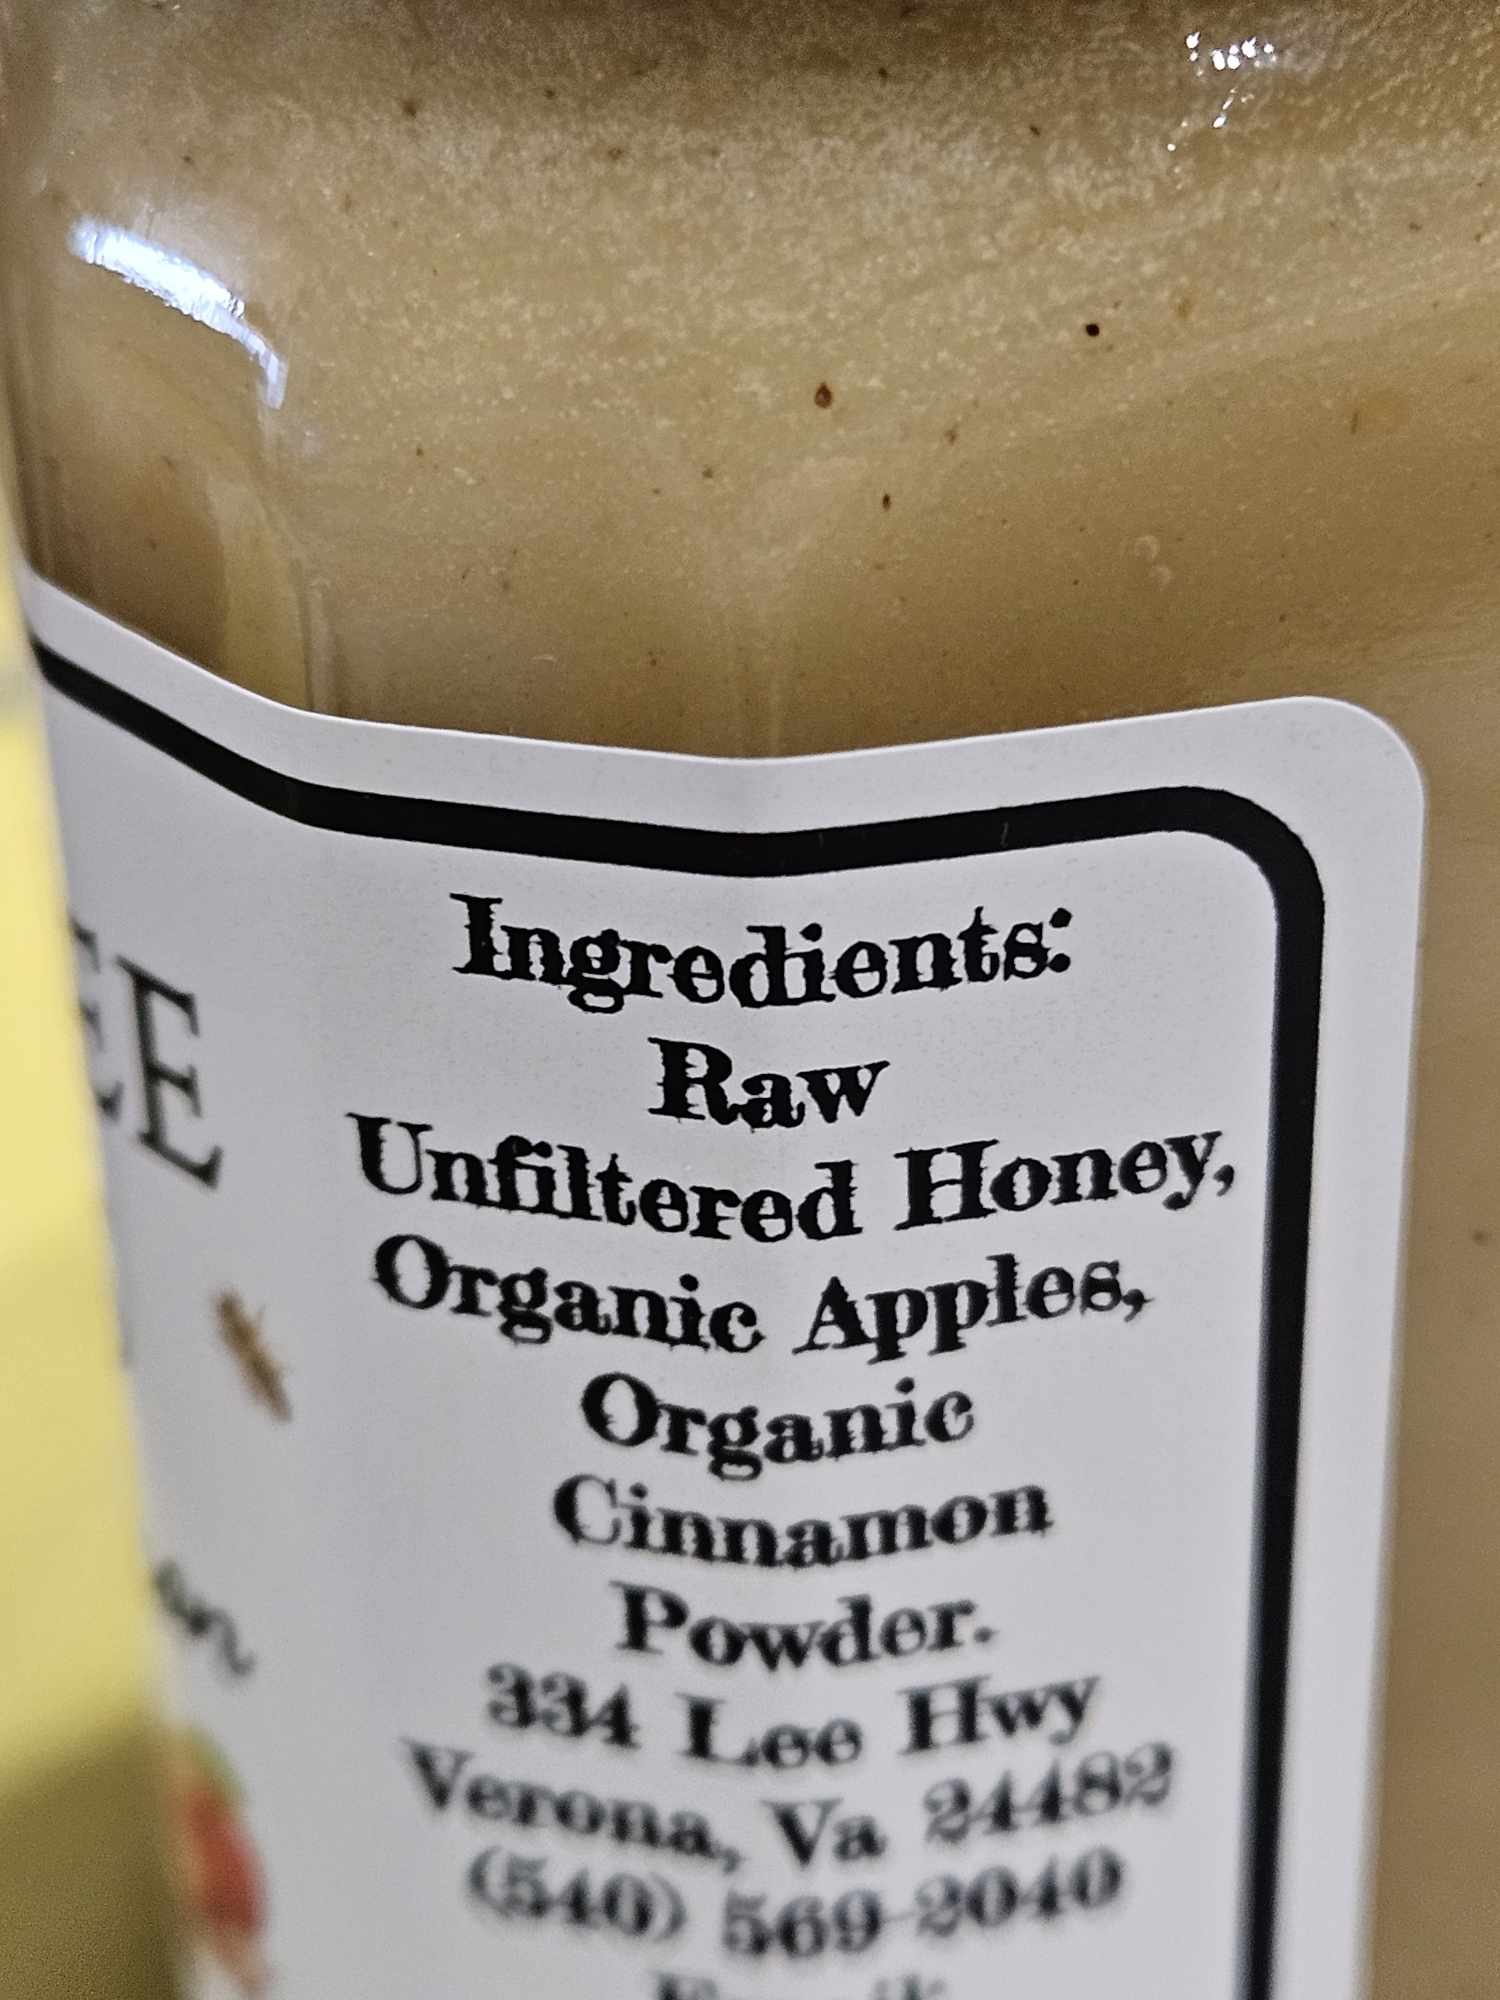 Gentle Bee Apiaries Raw Apple Cinnamon Creamed Honey 9OZ - Dusty's Country Store